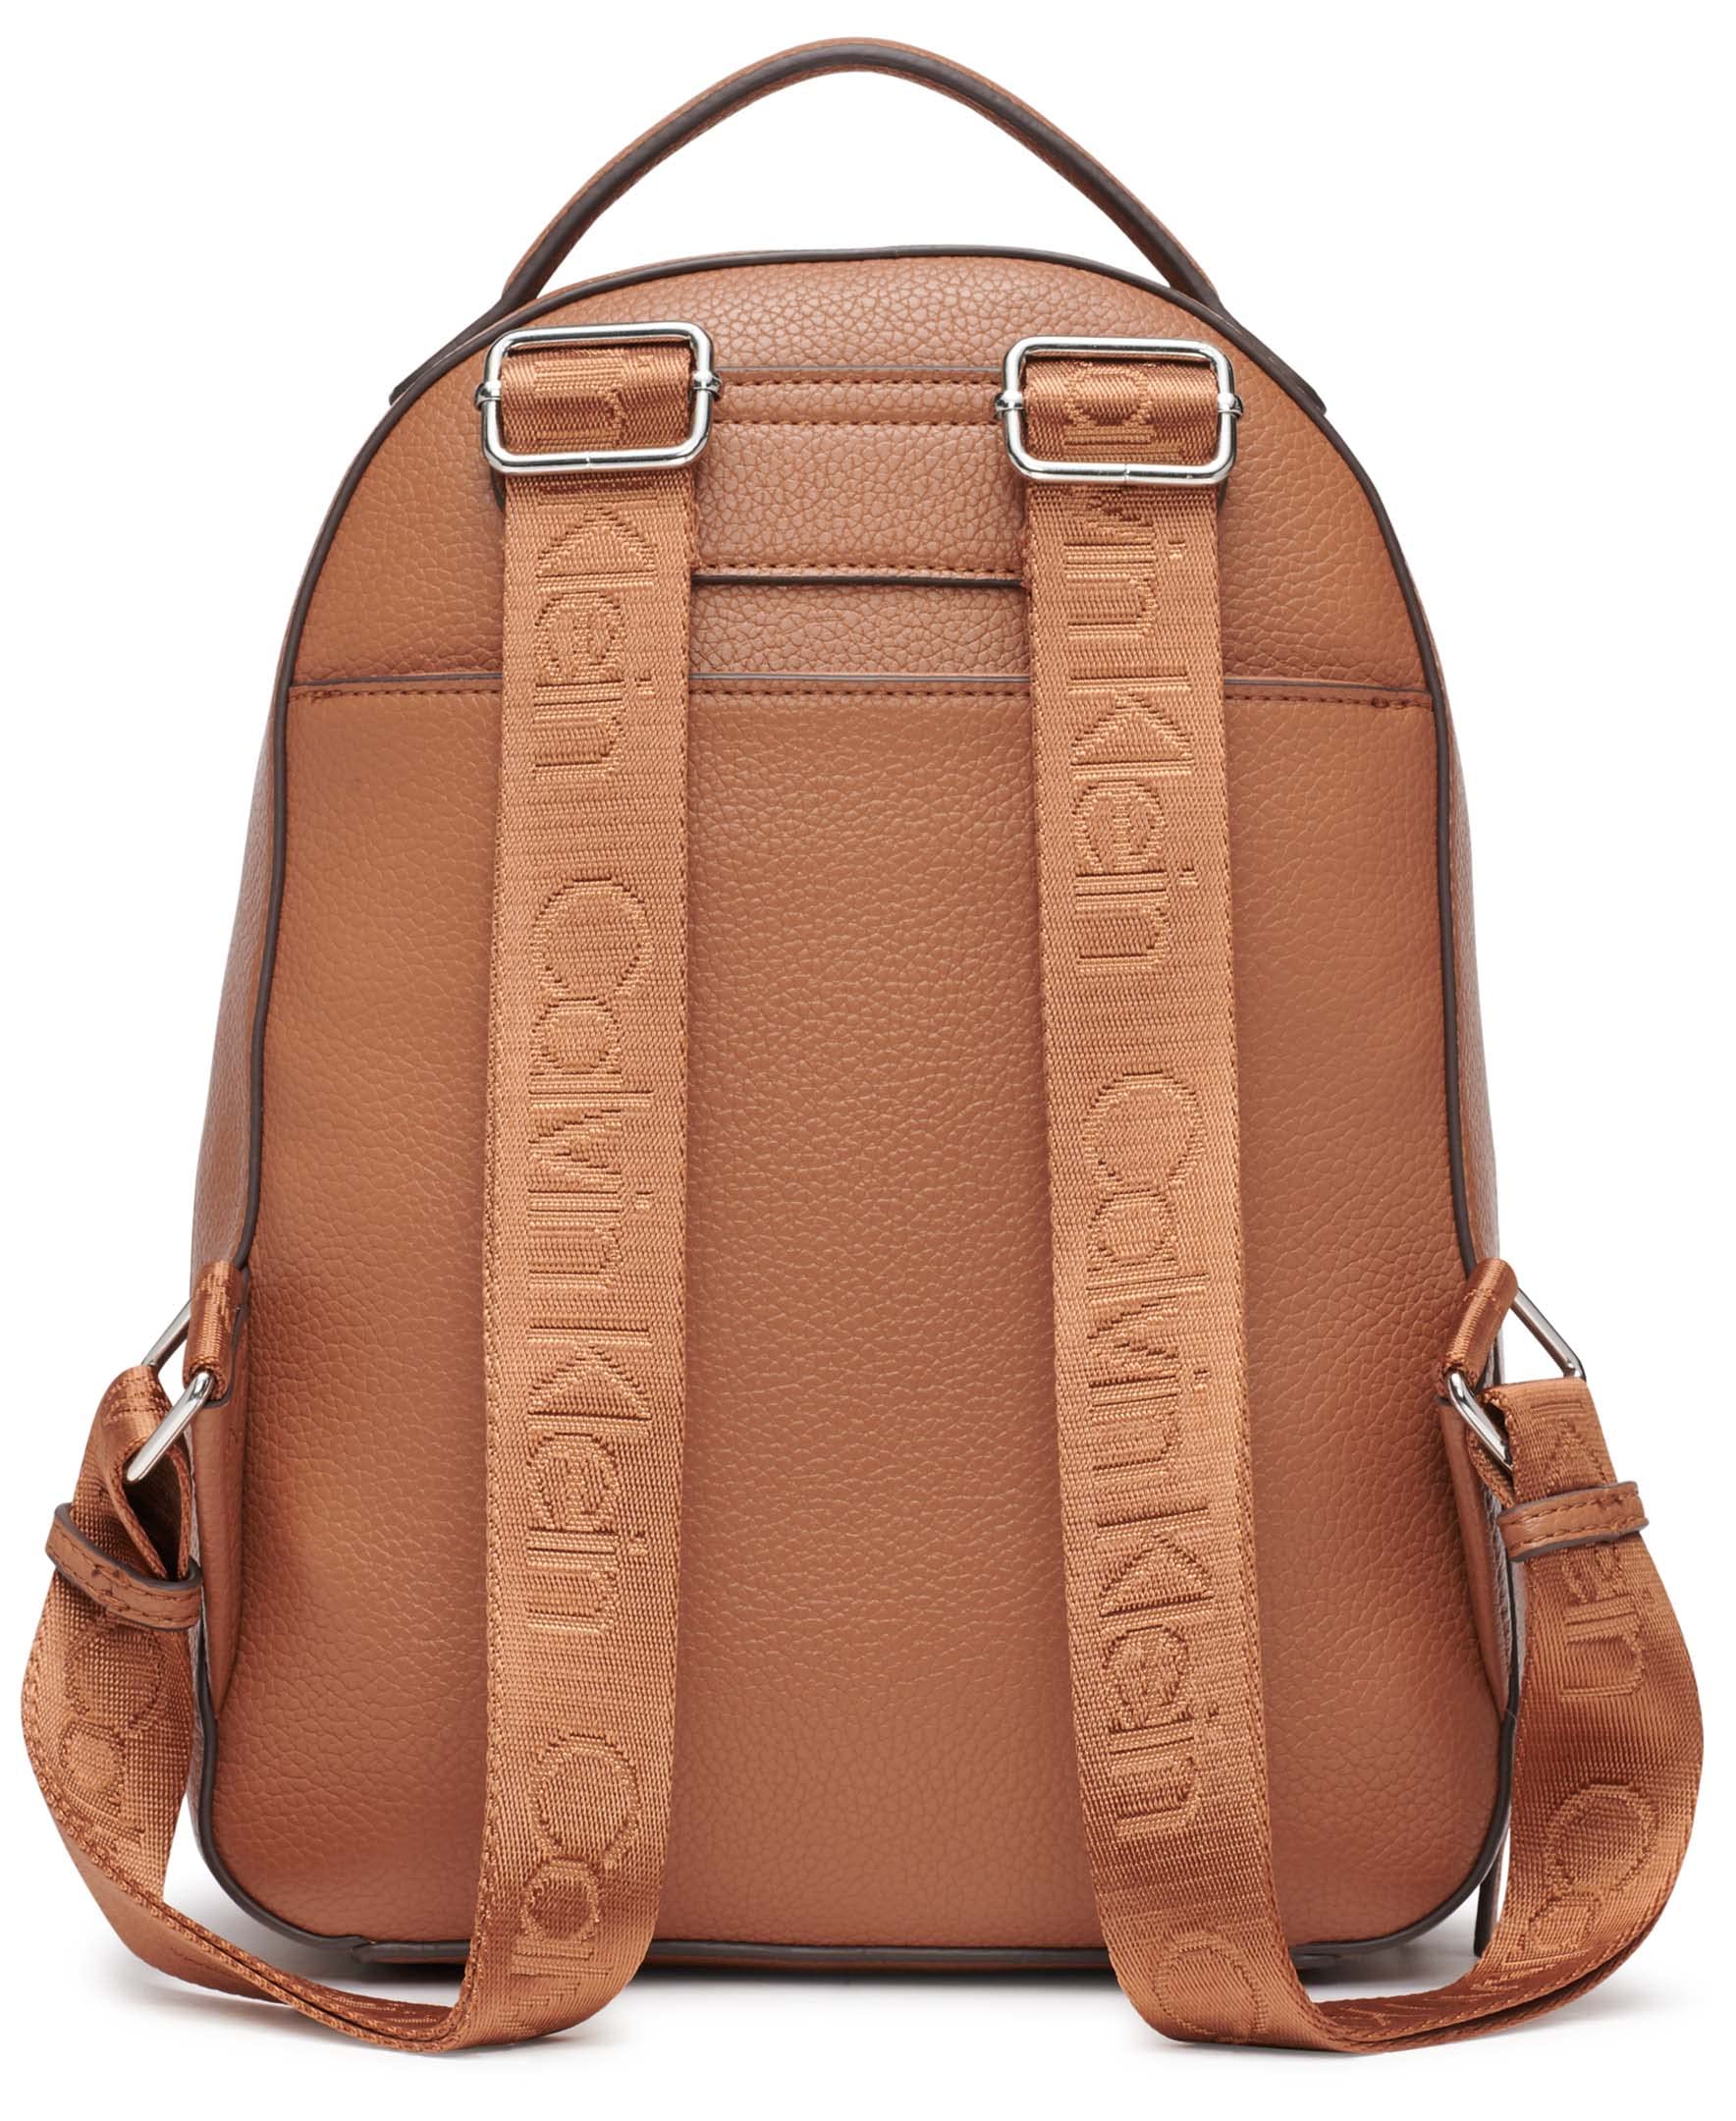 Calvin Klein Estelle Novelty-Backpack, Caramel, One Size